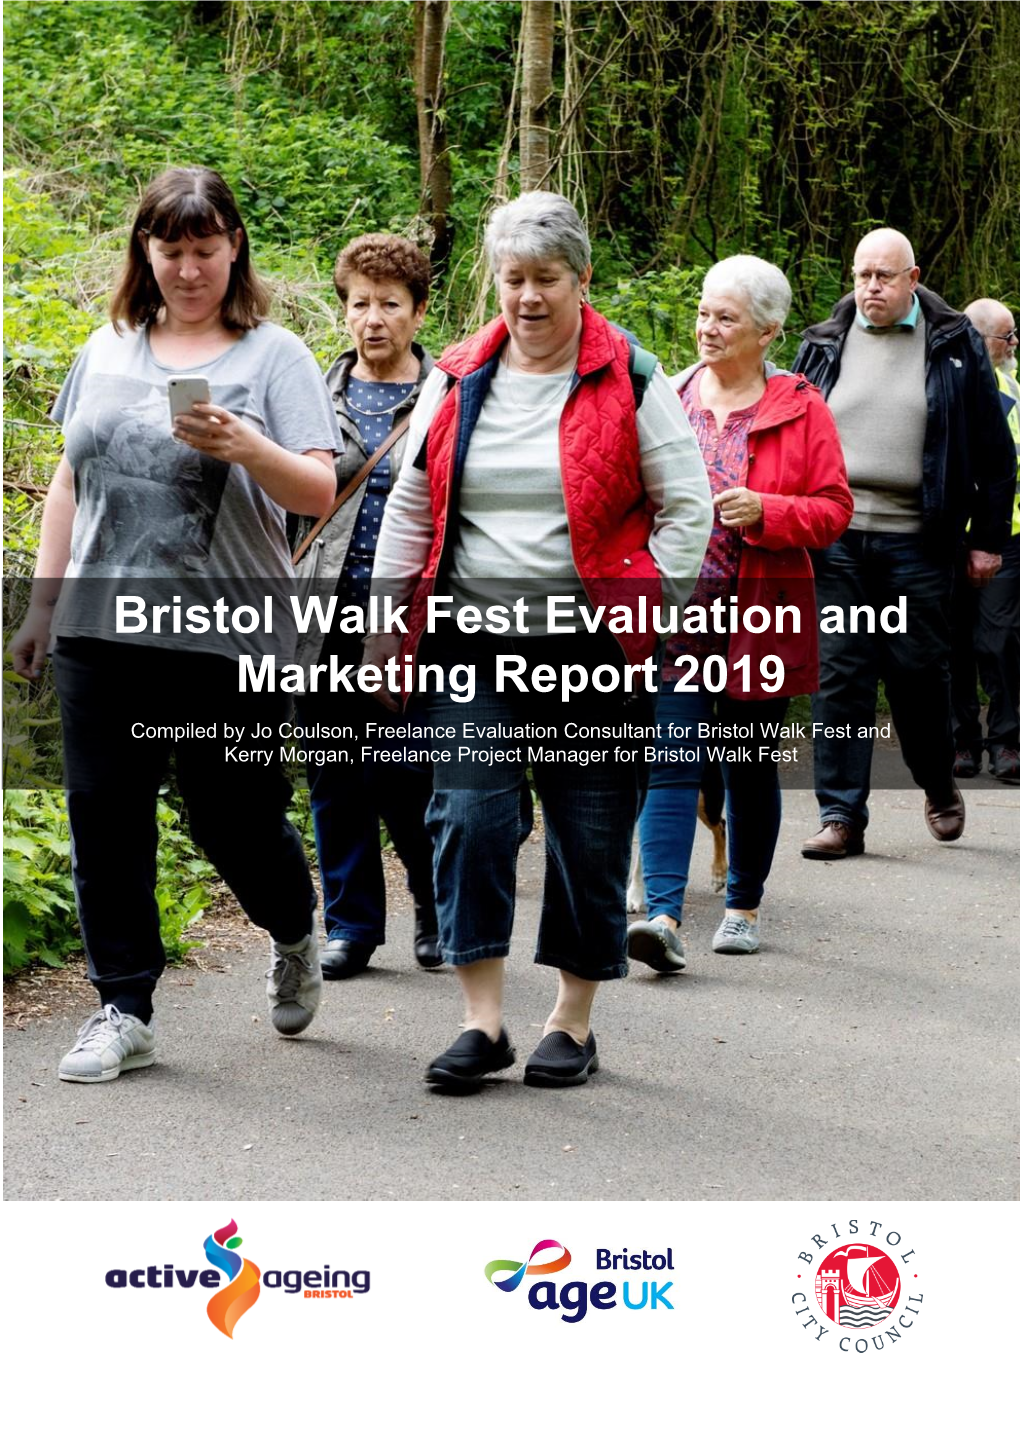 Bristol Walk Fest Evaluation and Marketing Report 2019